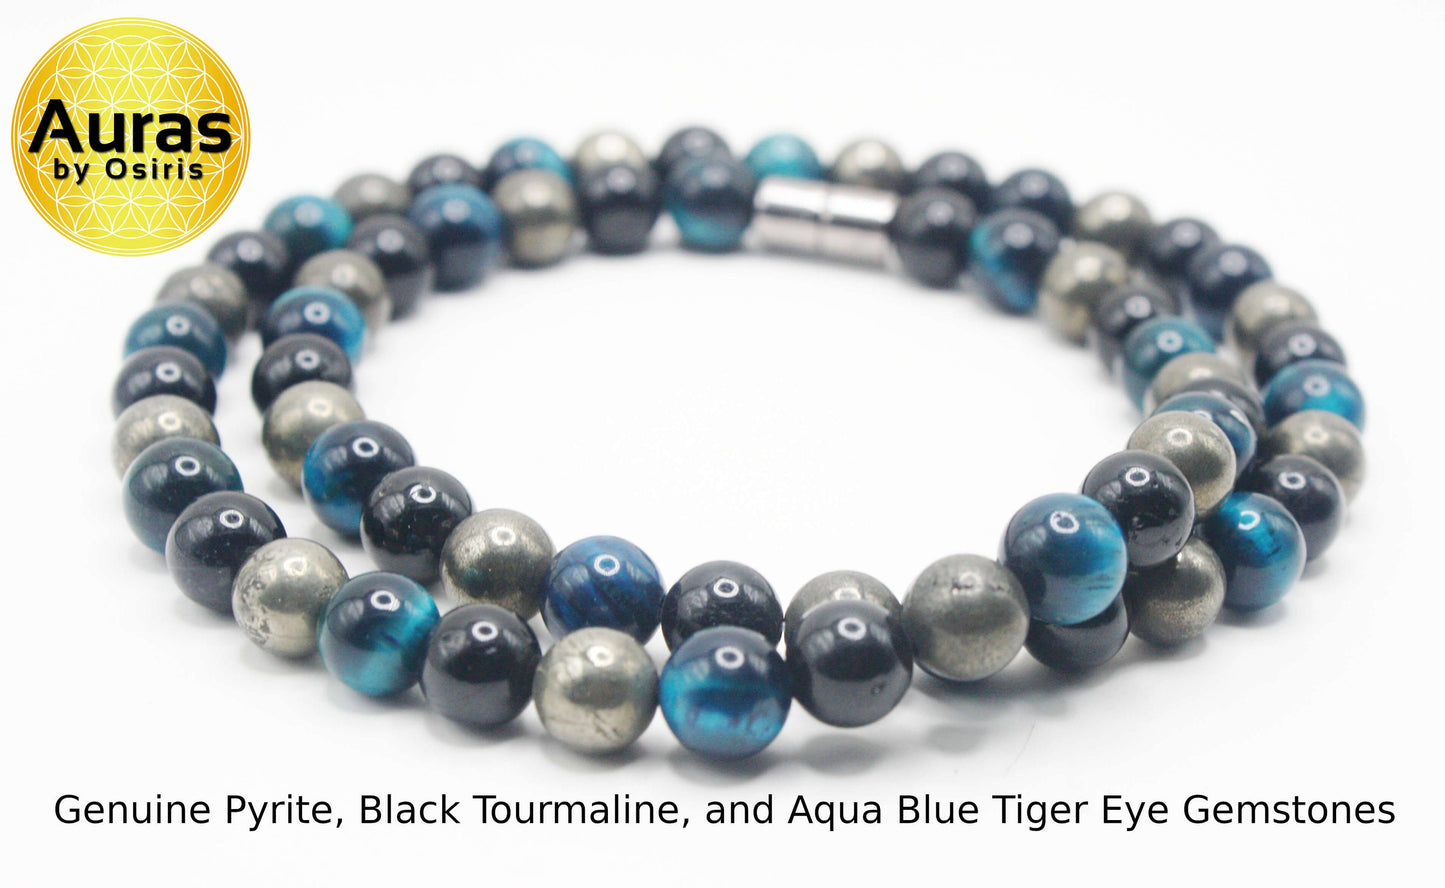 8mm Triple Protection Necklace for Men/Women Empath Protection Jewelry EMF Protection Necklace Black Tourmaline Aqua Blue Tiger Eye - Pyrite